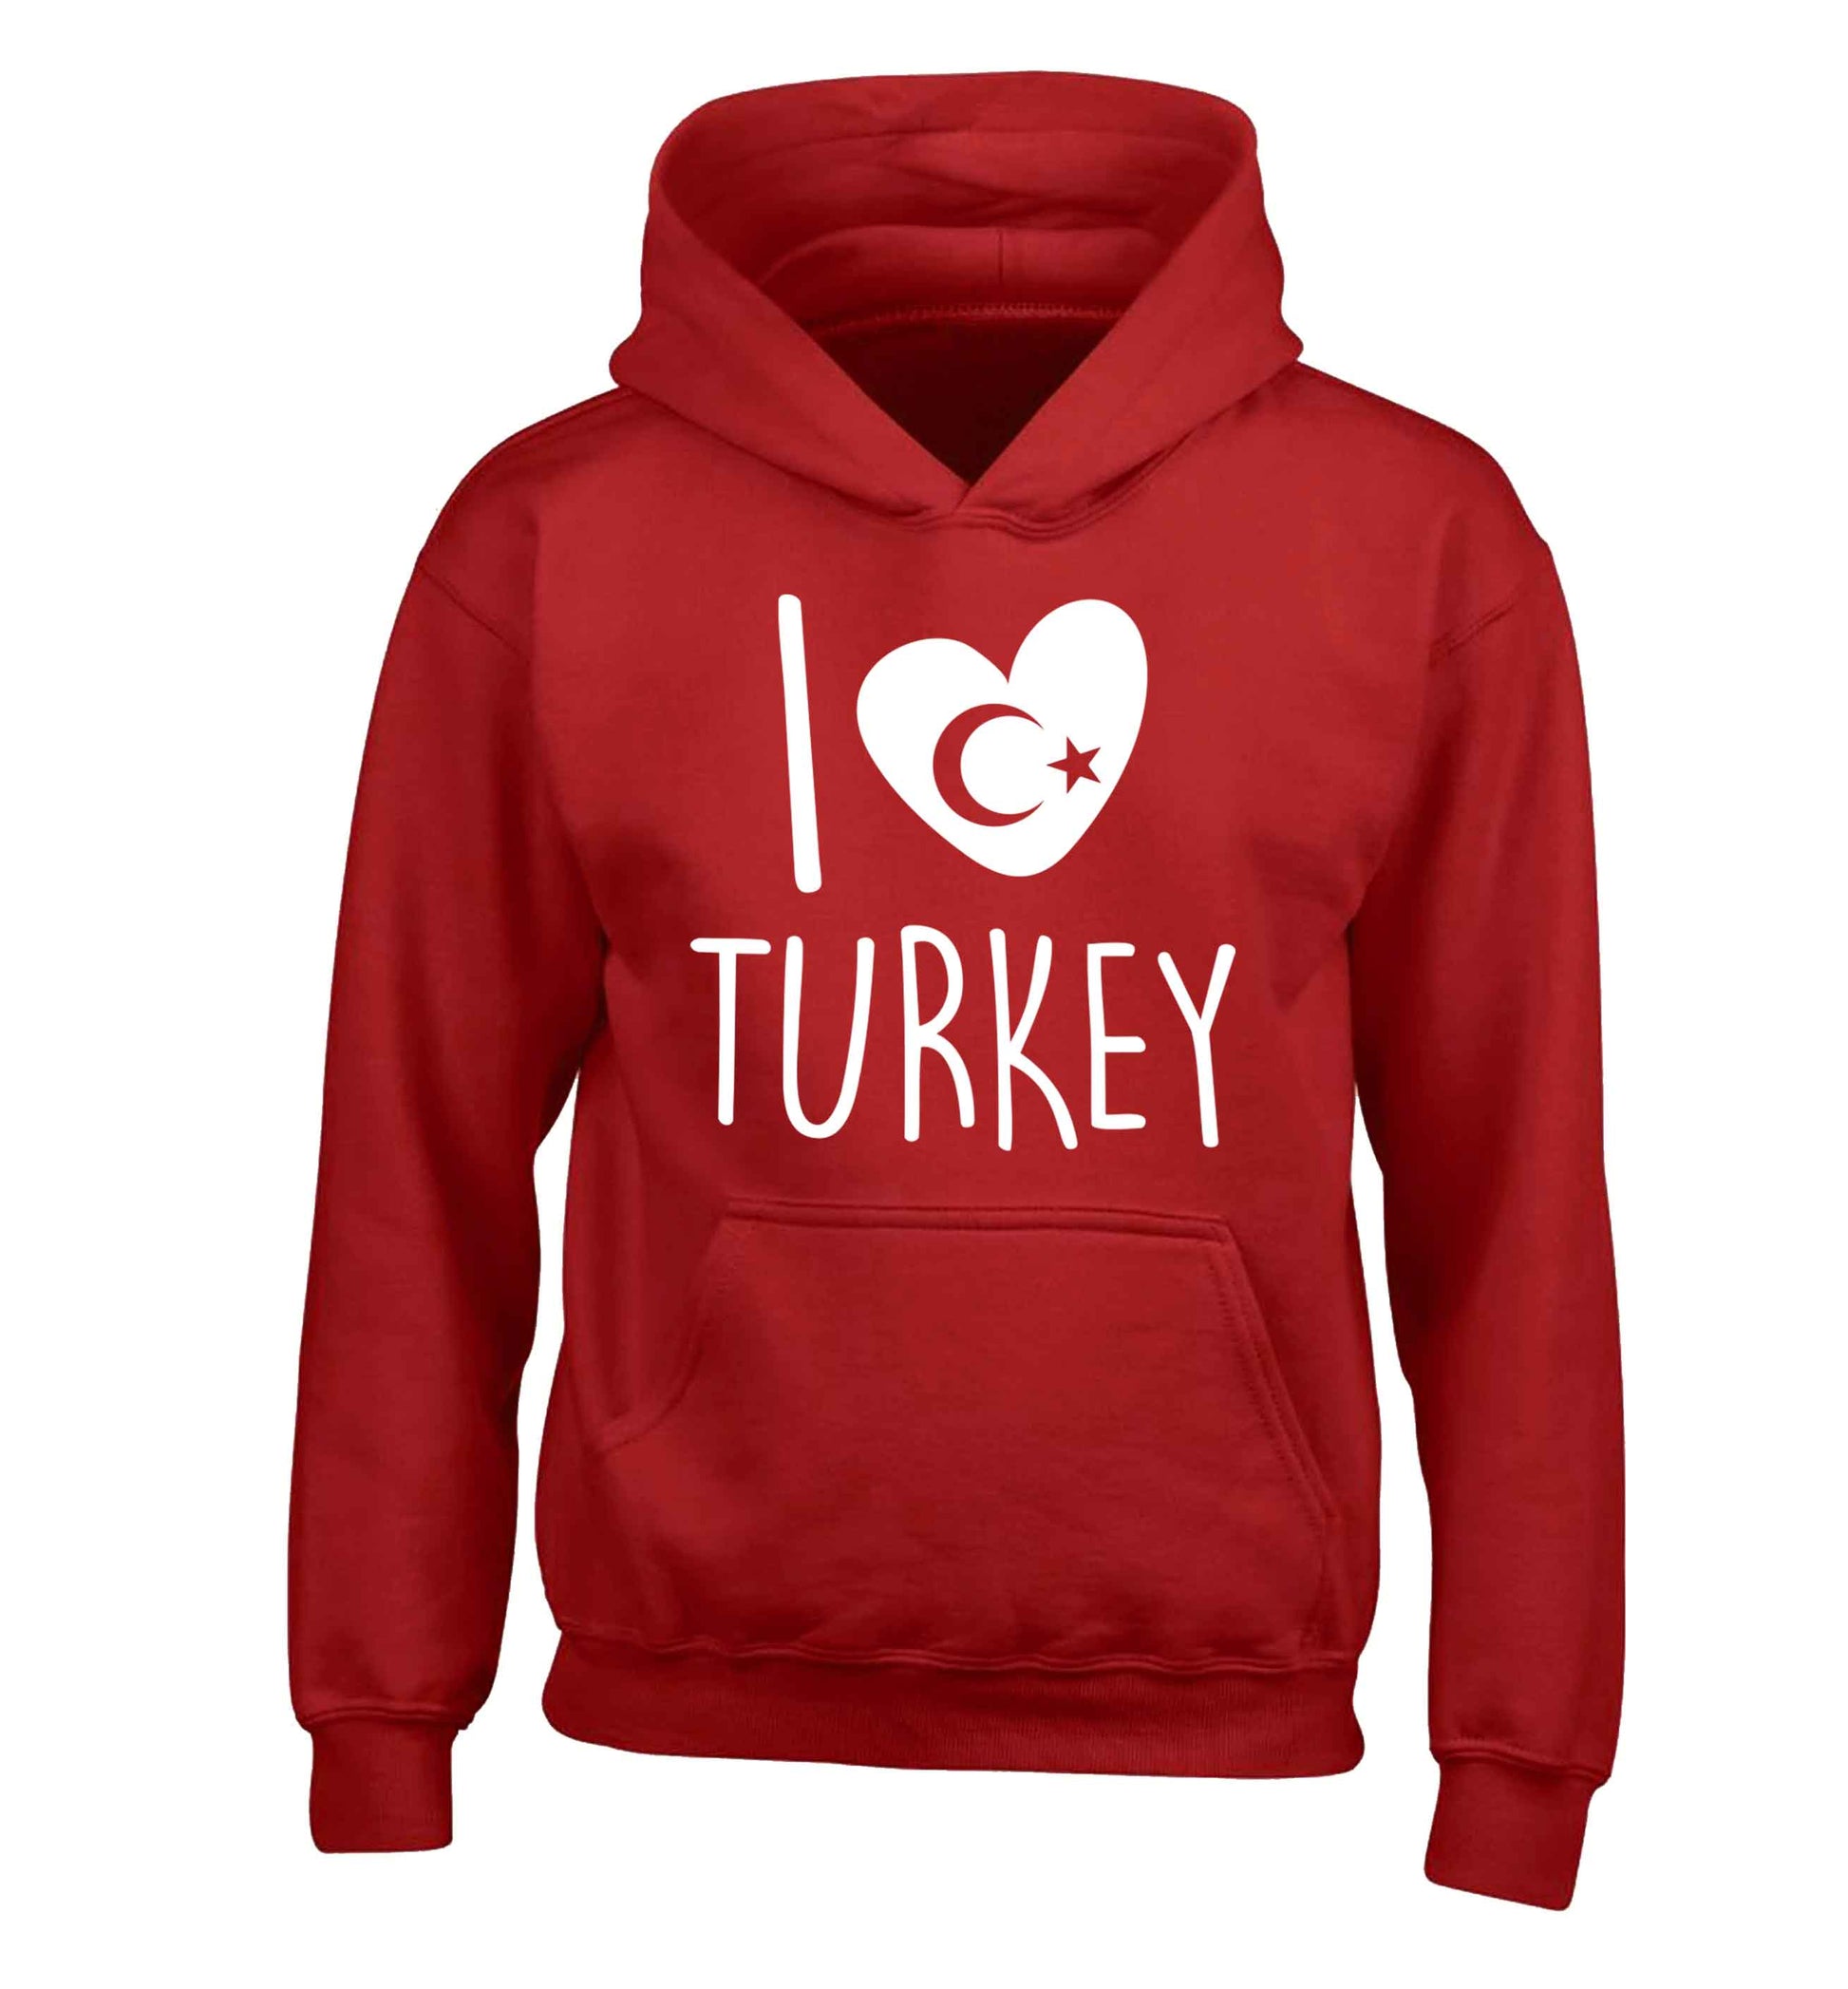 I love Turkey children's red hoodie 12-13 Years